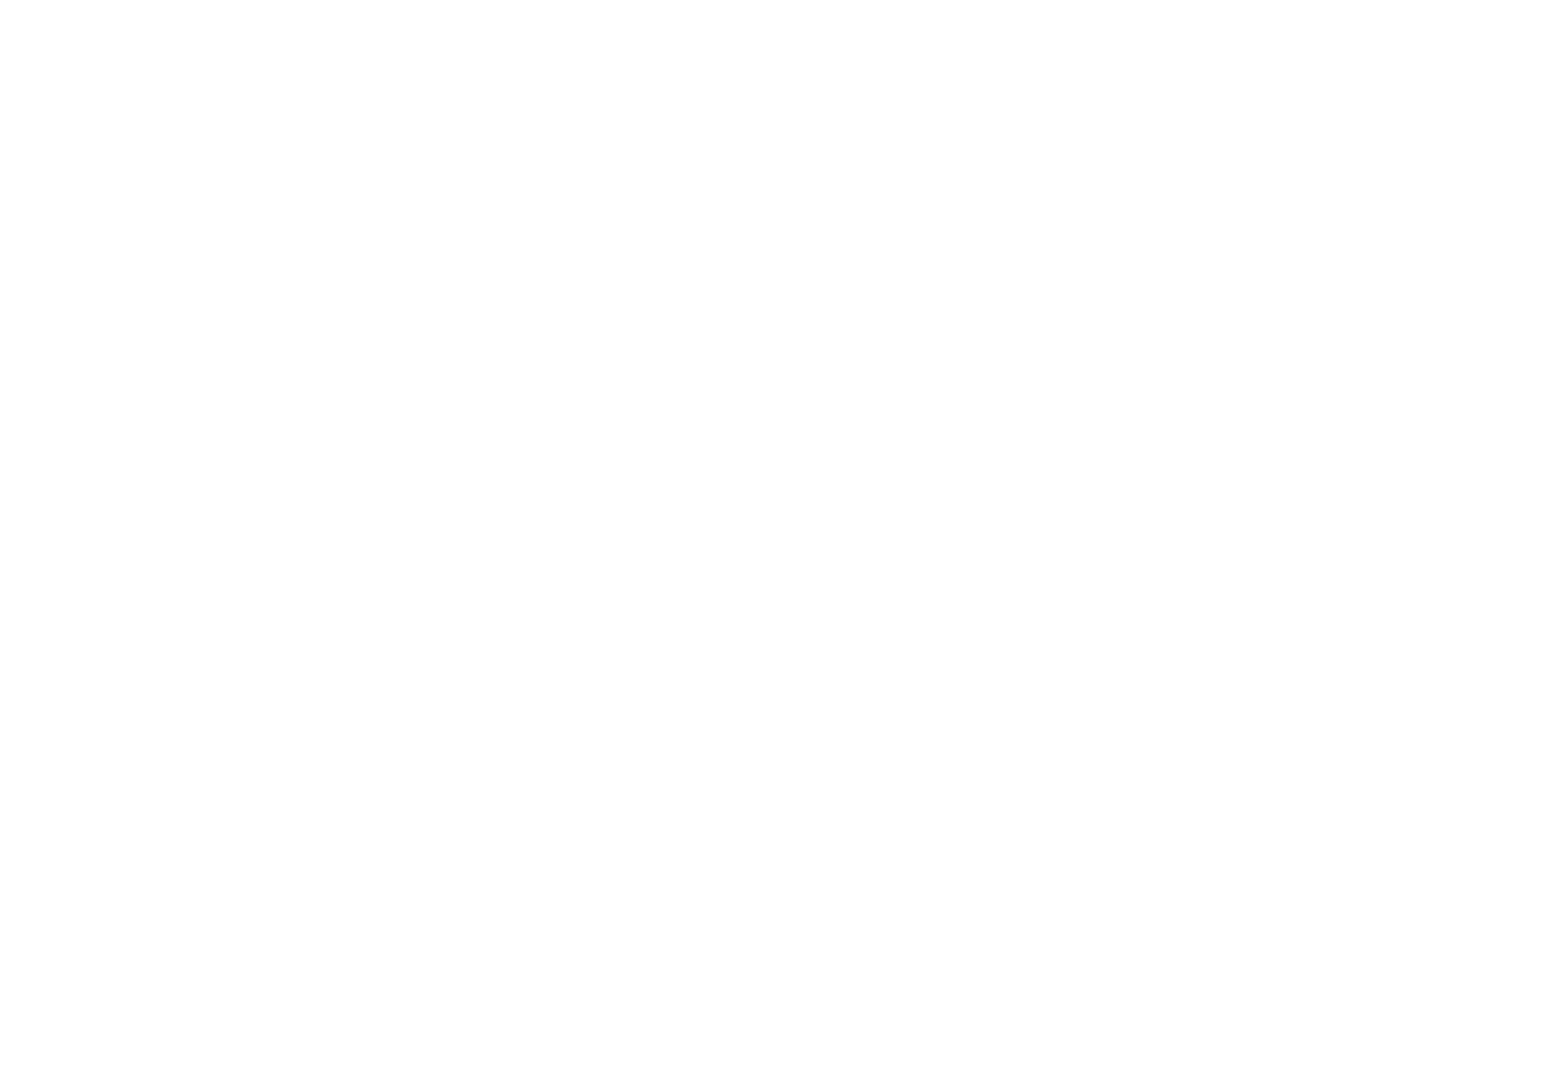 American Vanguard logo for dark backgrounds (transparent PNG)